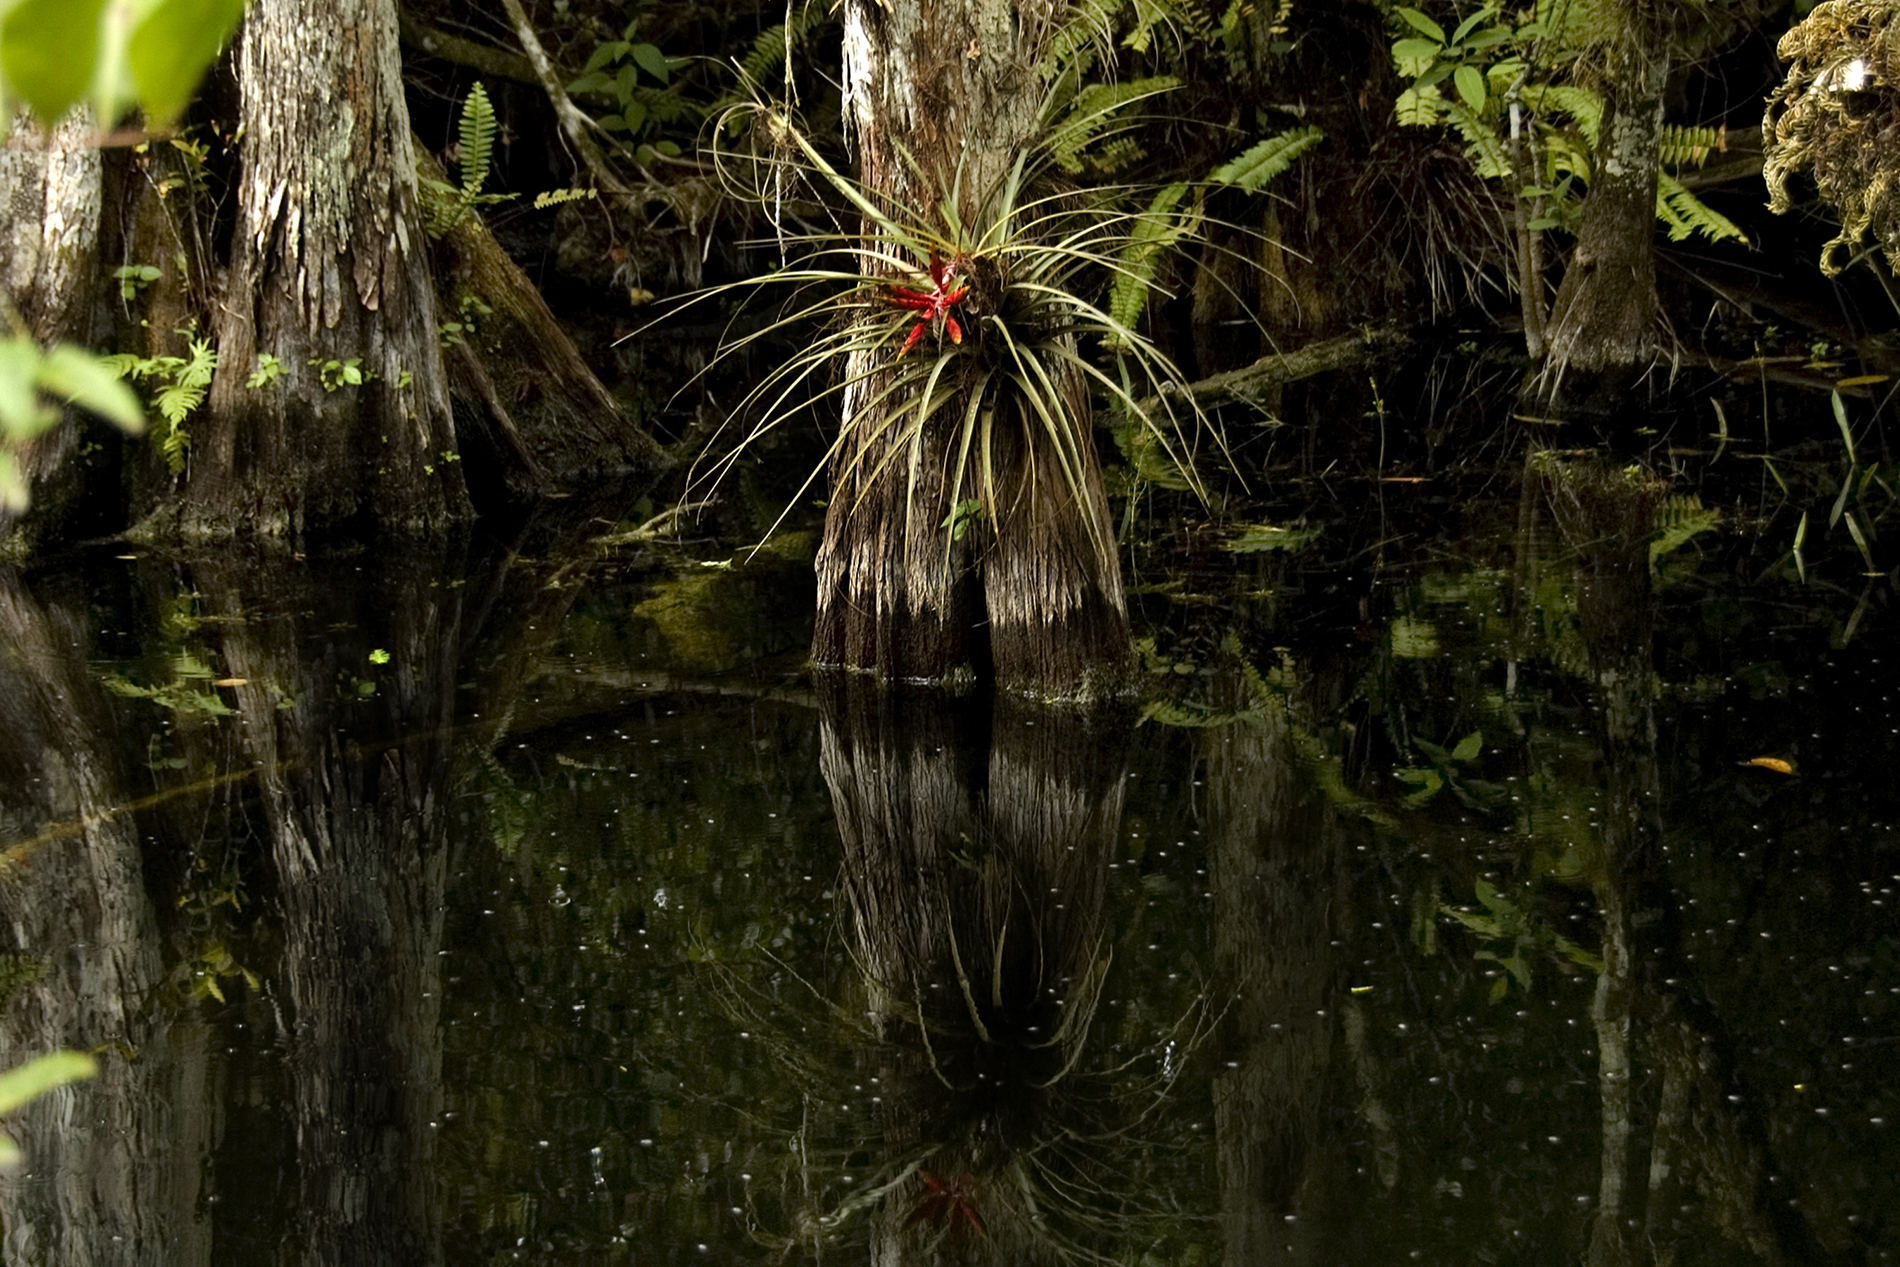 Florida is Purchasing 20,000 Acres of Everglade Wetlands